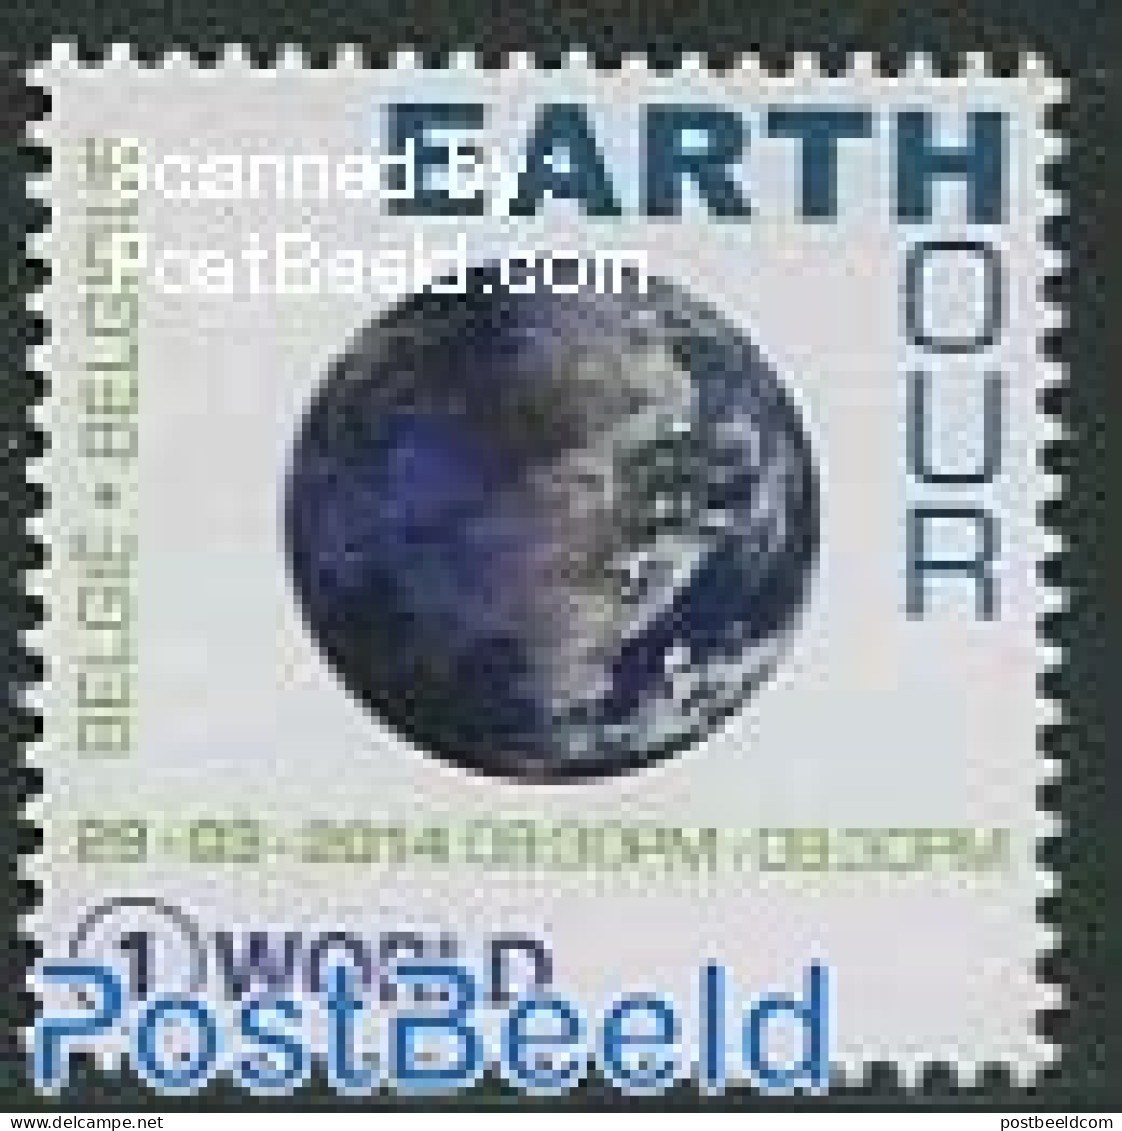 Belgium 2014 Earth Hour 1v, Mint NH, Nature - Various - Environment - Globes - Ungebraucht